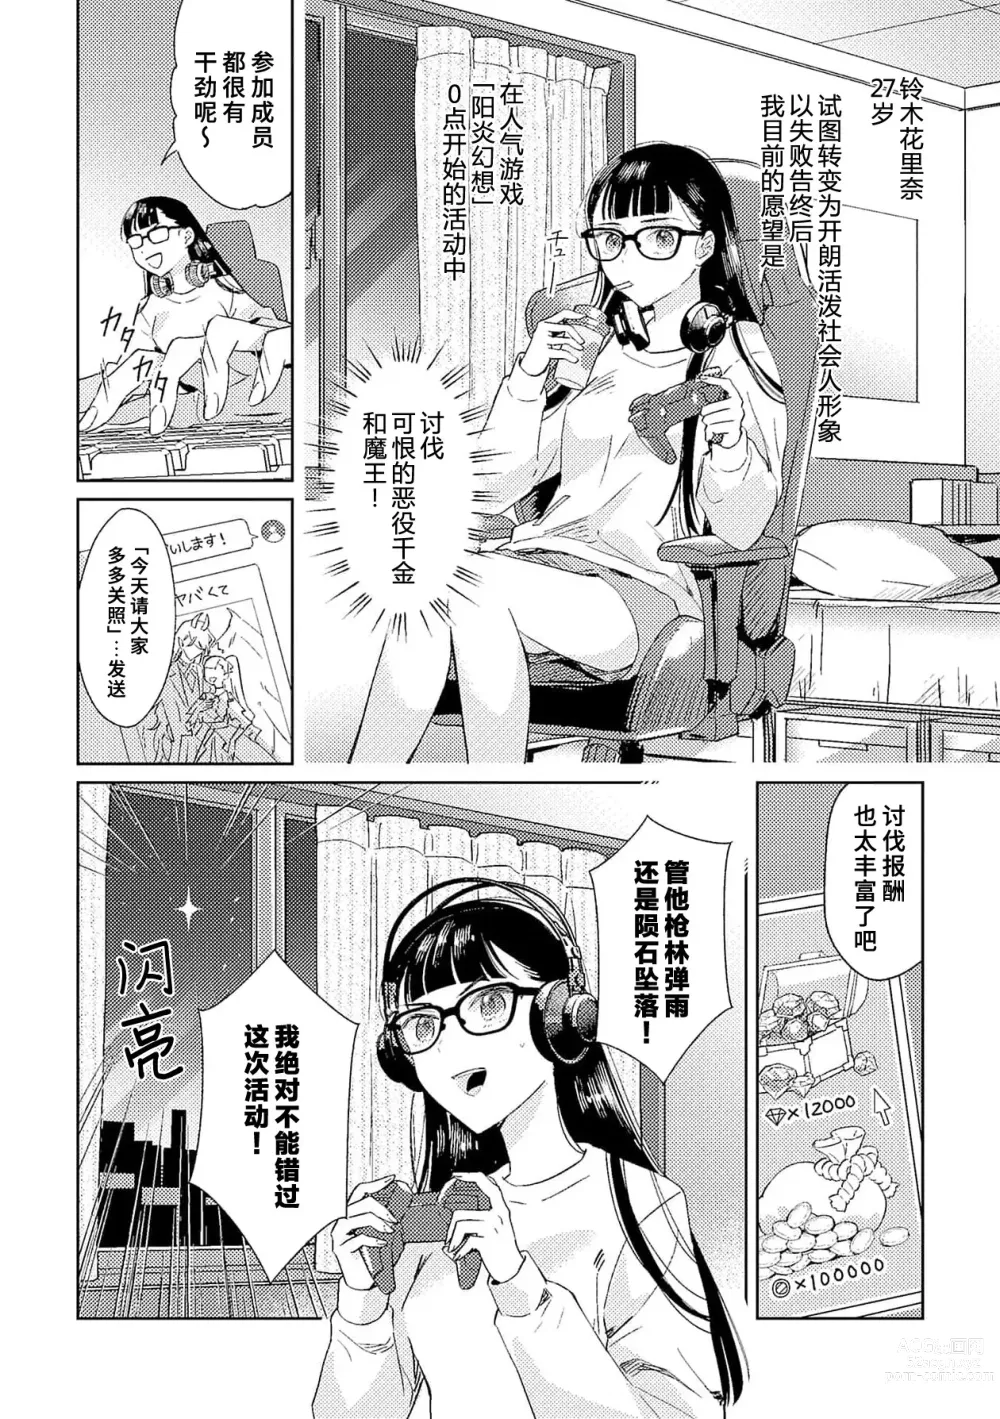 Page 4 of manga 身为恶役千金，堕落于魔界王子身下这条路线真的可以有？ 1-4